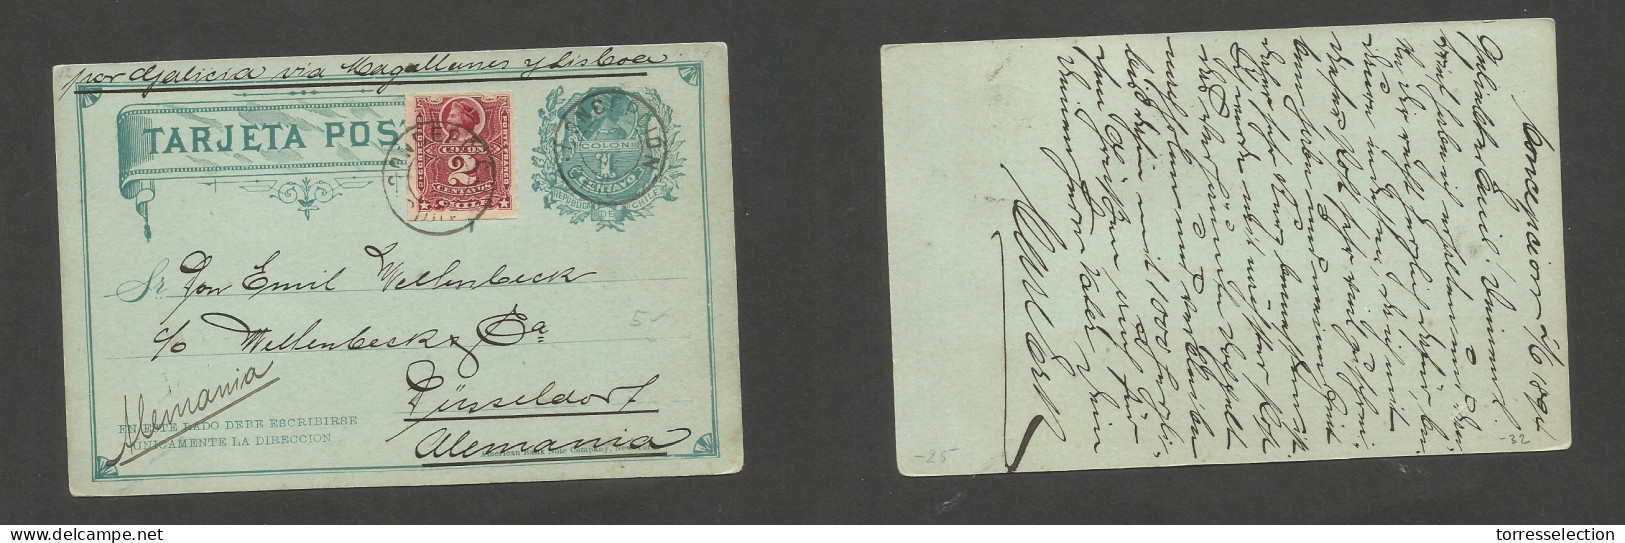 CHILE - Stationery. 1894 (2 June) Concepcion - Germany, Dusseldorf Por Galicia Via Magallanes - Lisboa. 1c Green Stat Ca - Cile